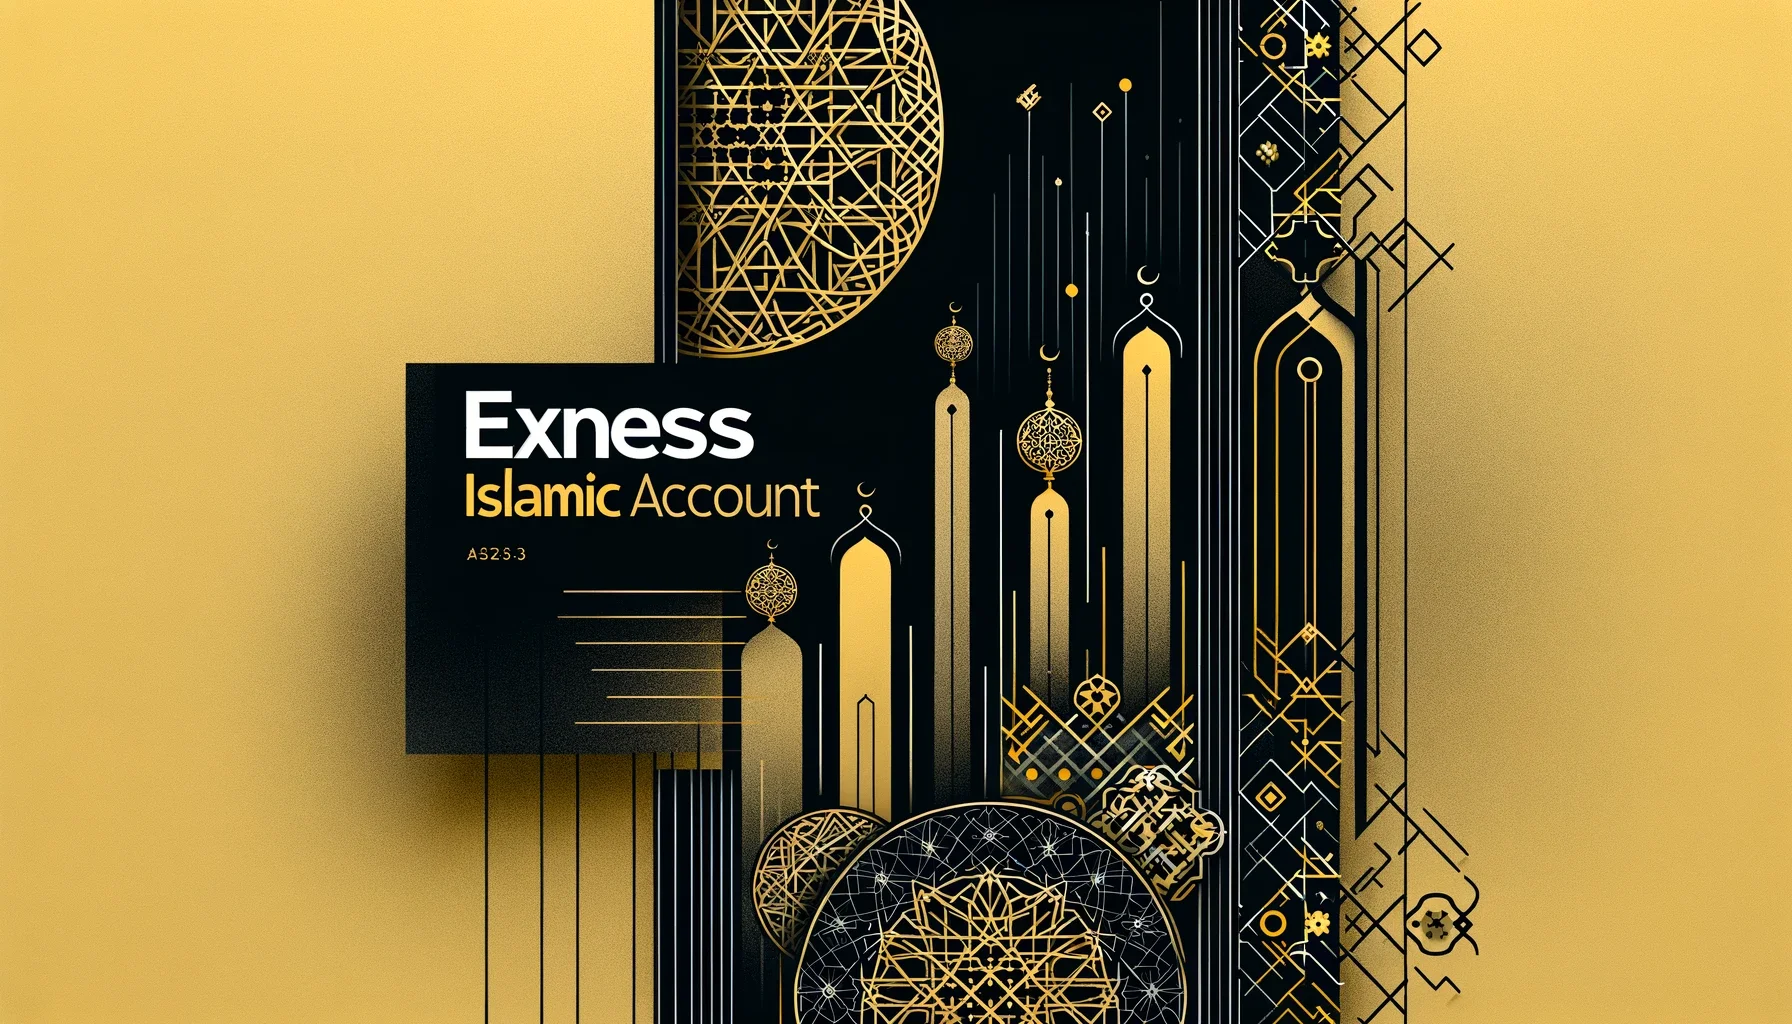 Exness Islamic Account Type.